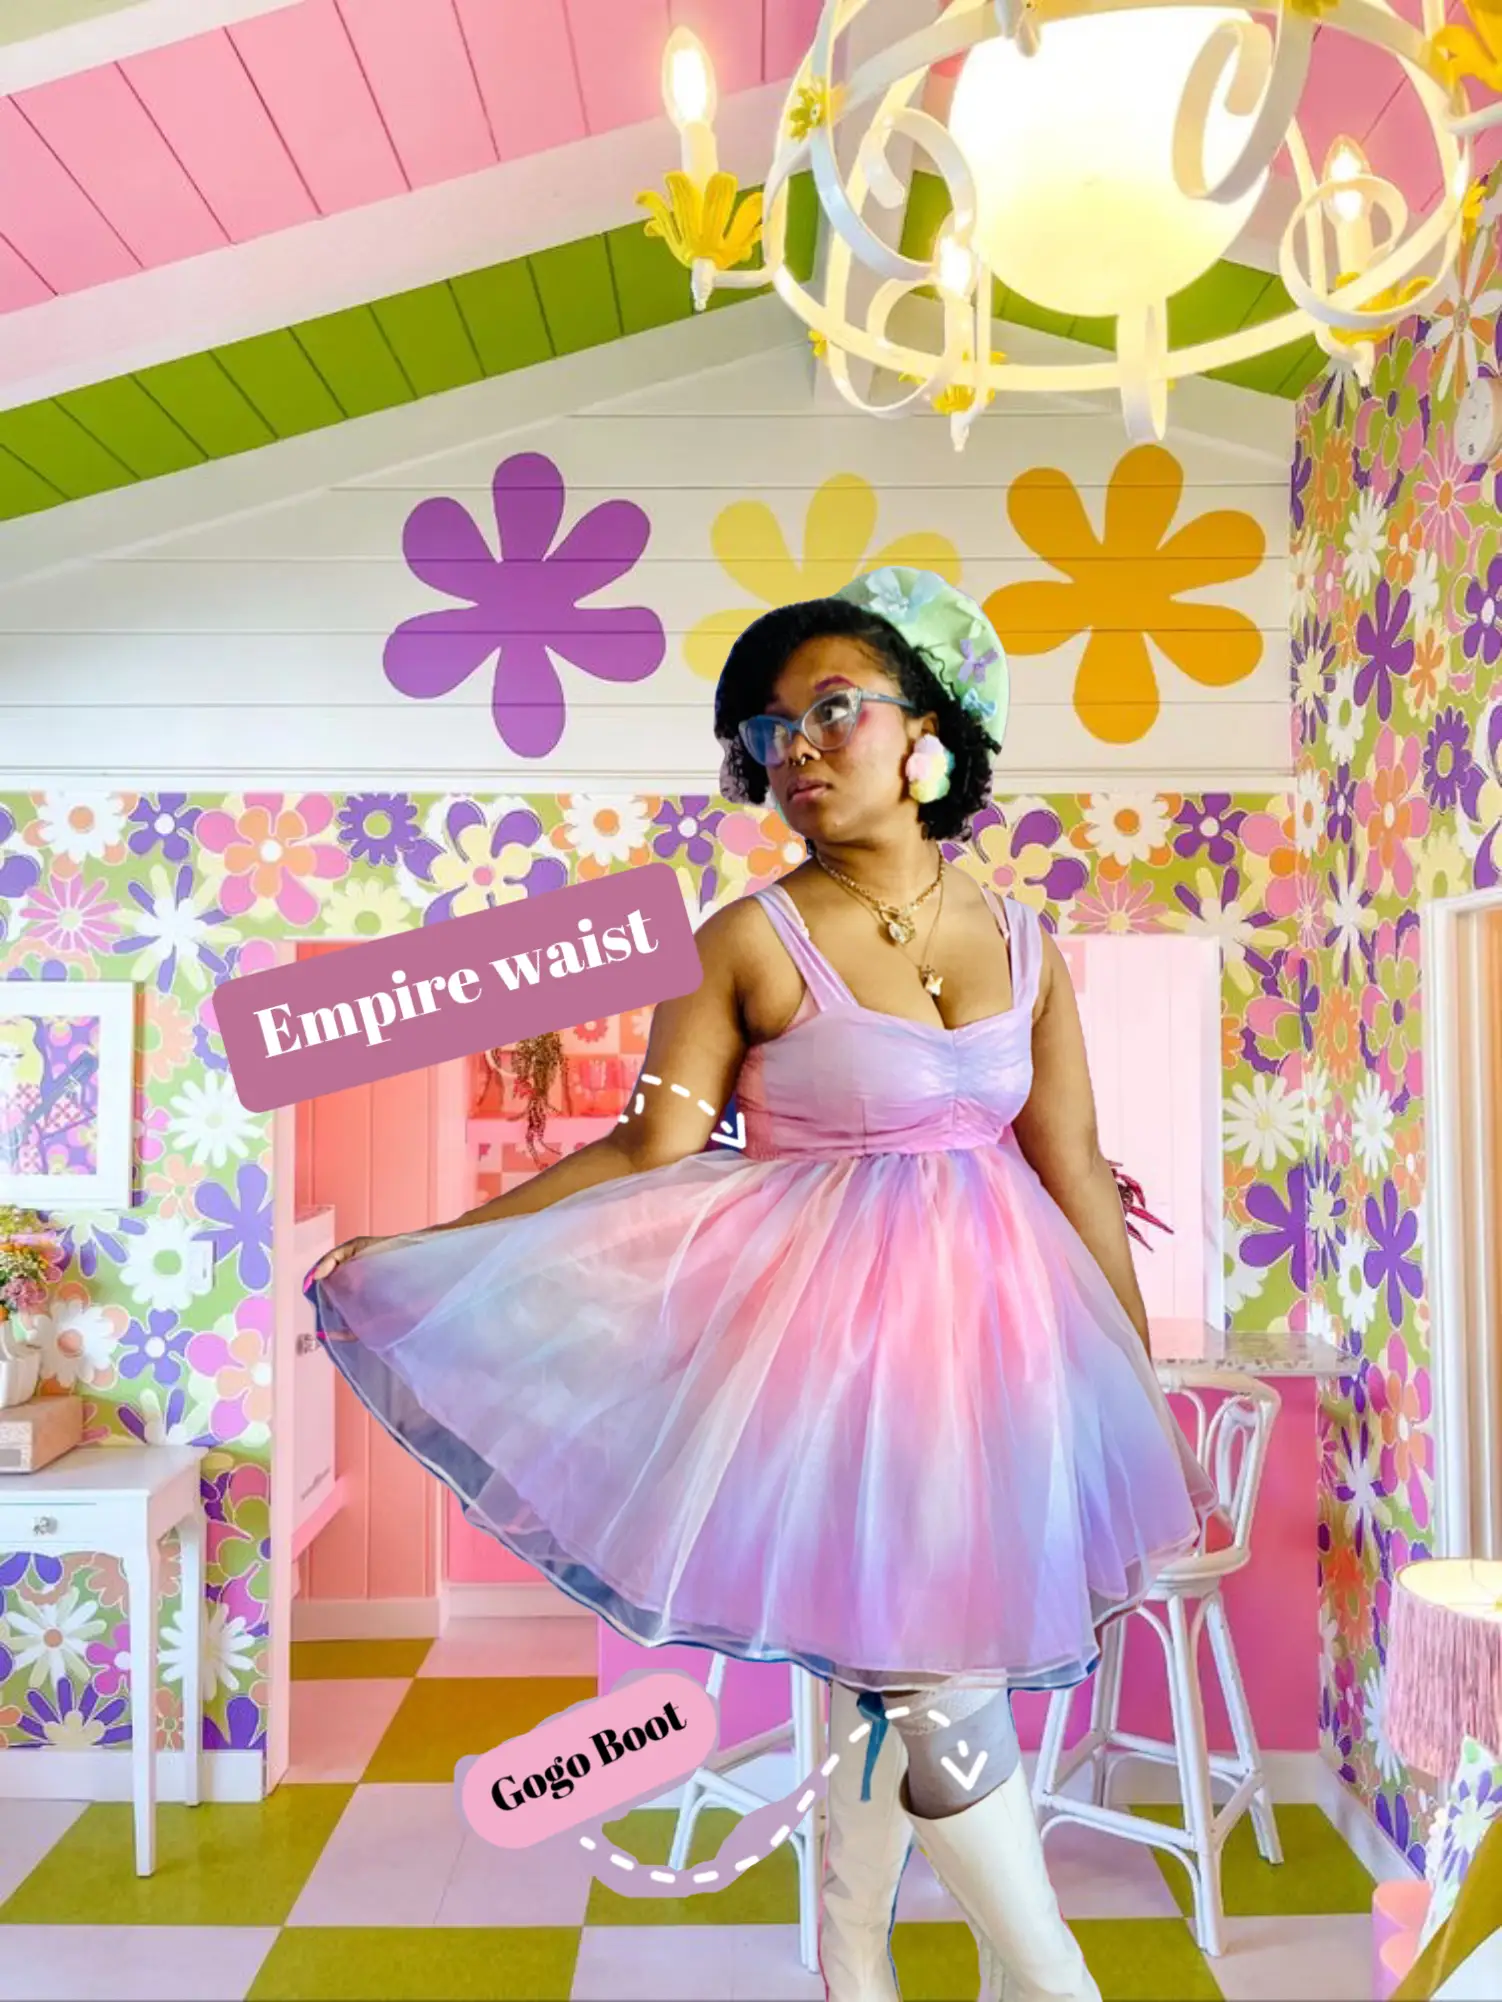 Magical Girl Purple Leggings Lolita Pastel Mahou Decora Cult Party